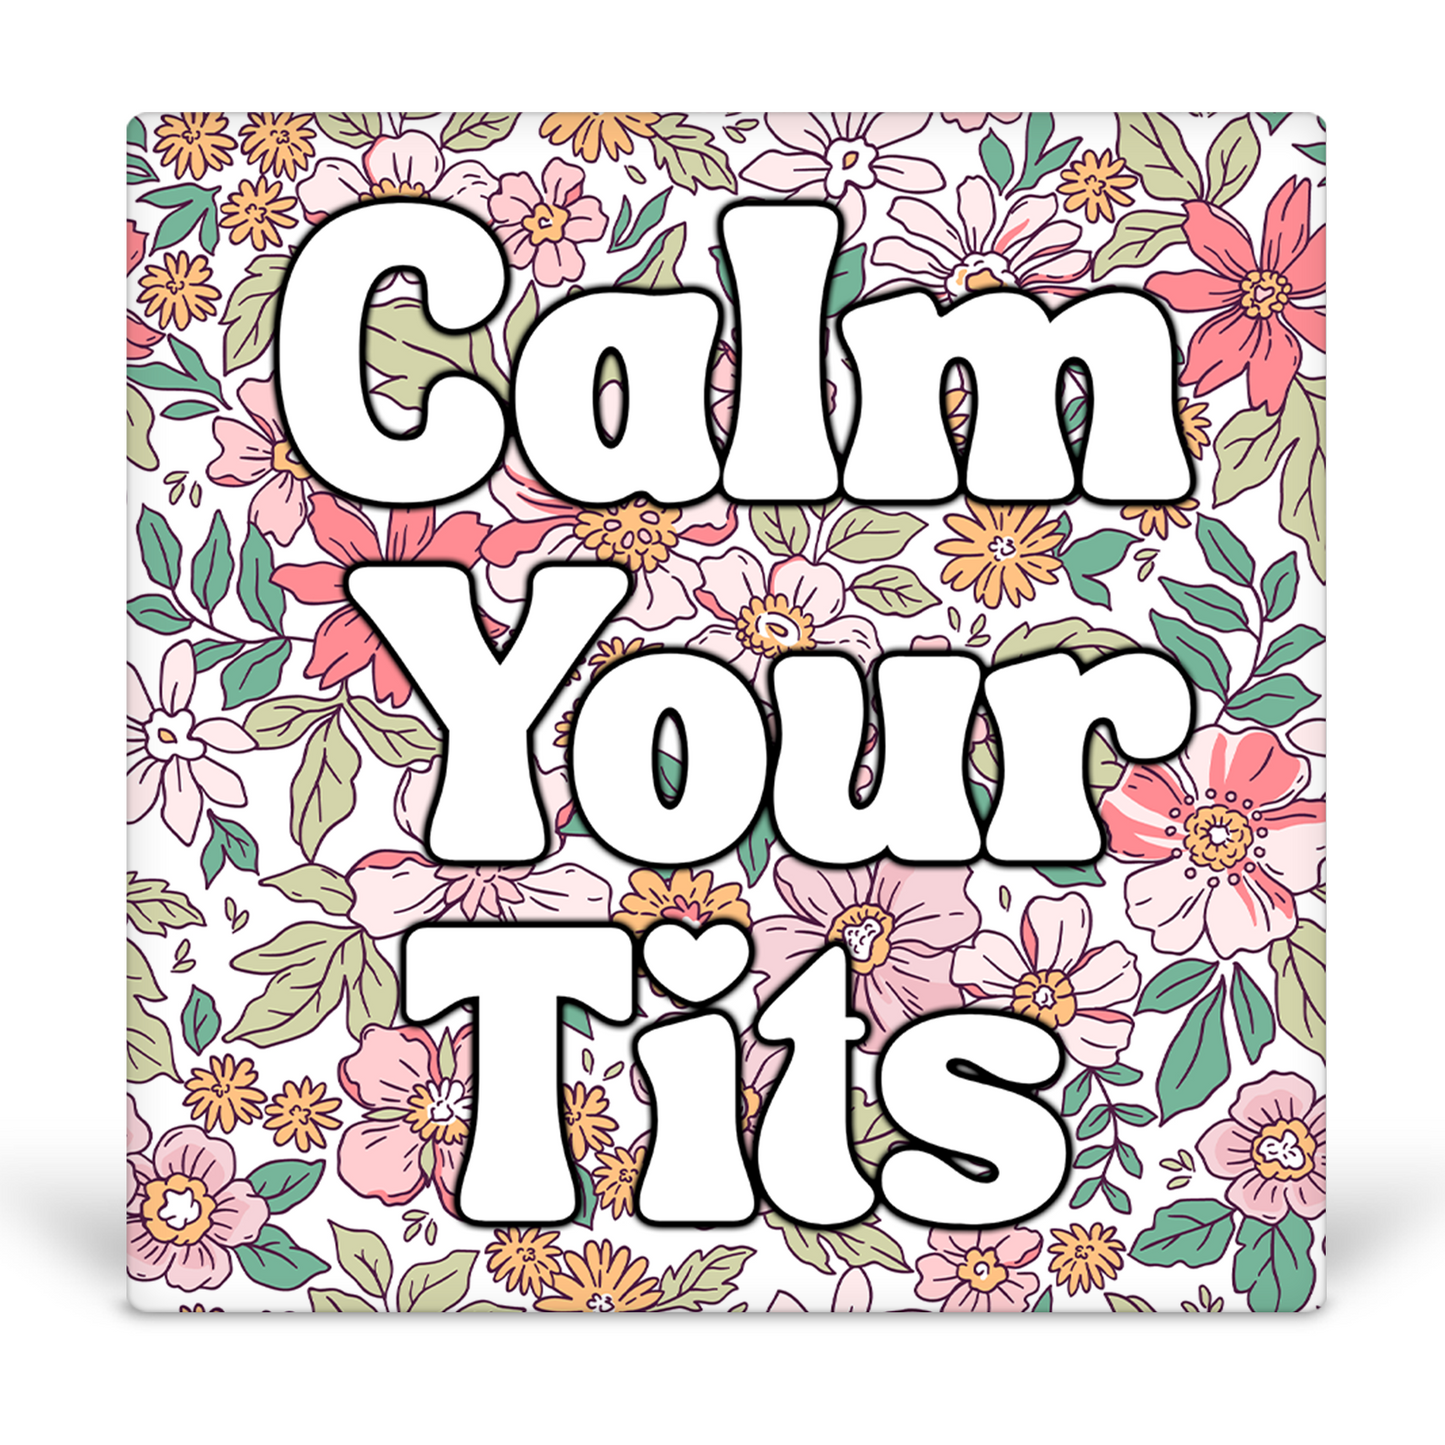 Calm Your Tits Desk Sign